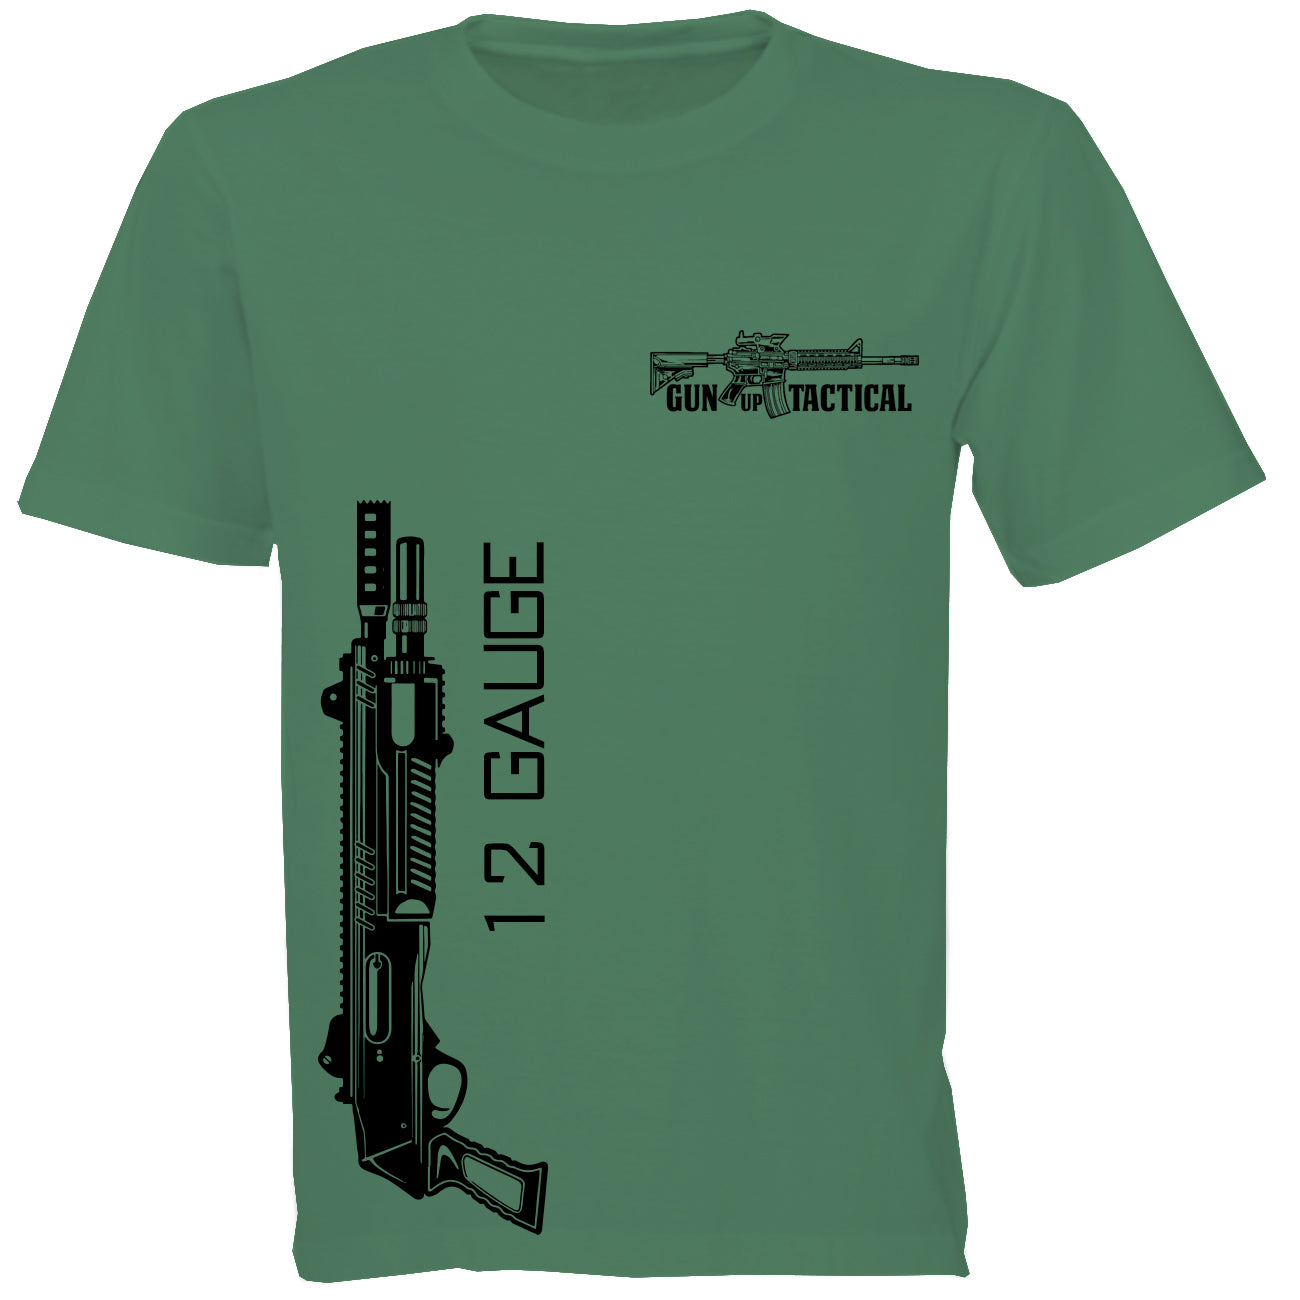 12 Gauge Shotgun T-Shirt - Gun Up Tactical